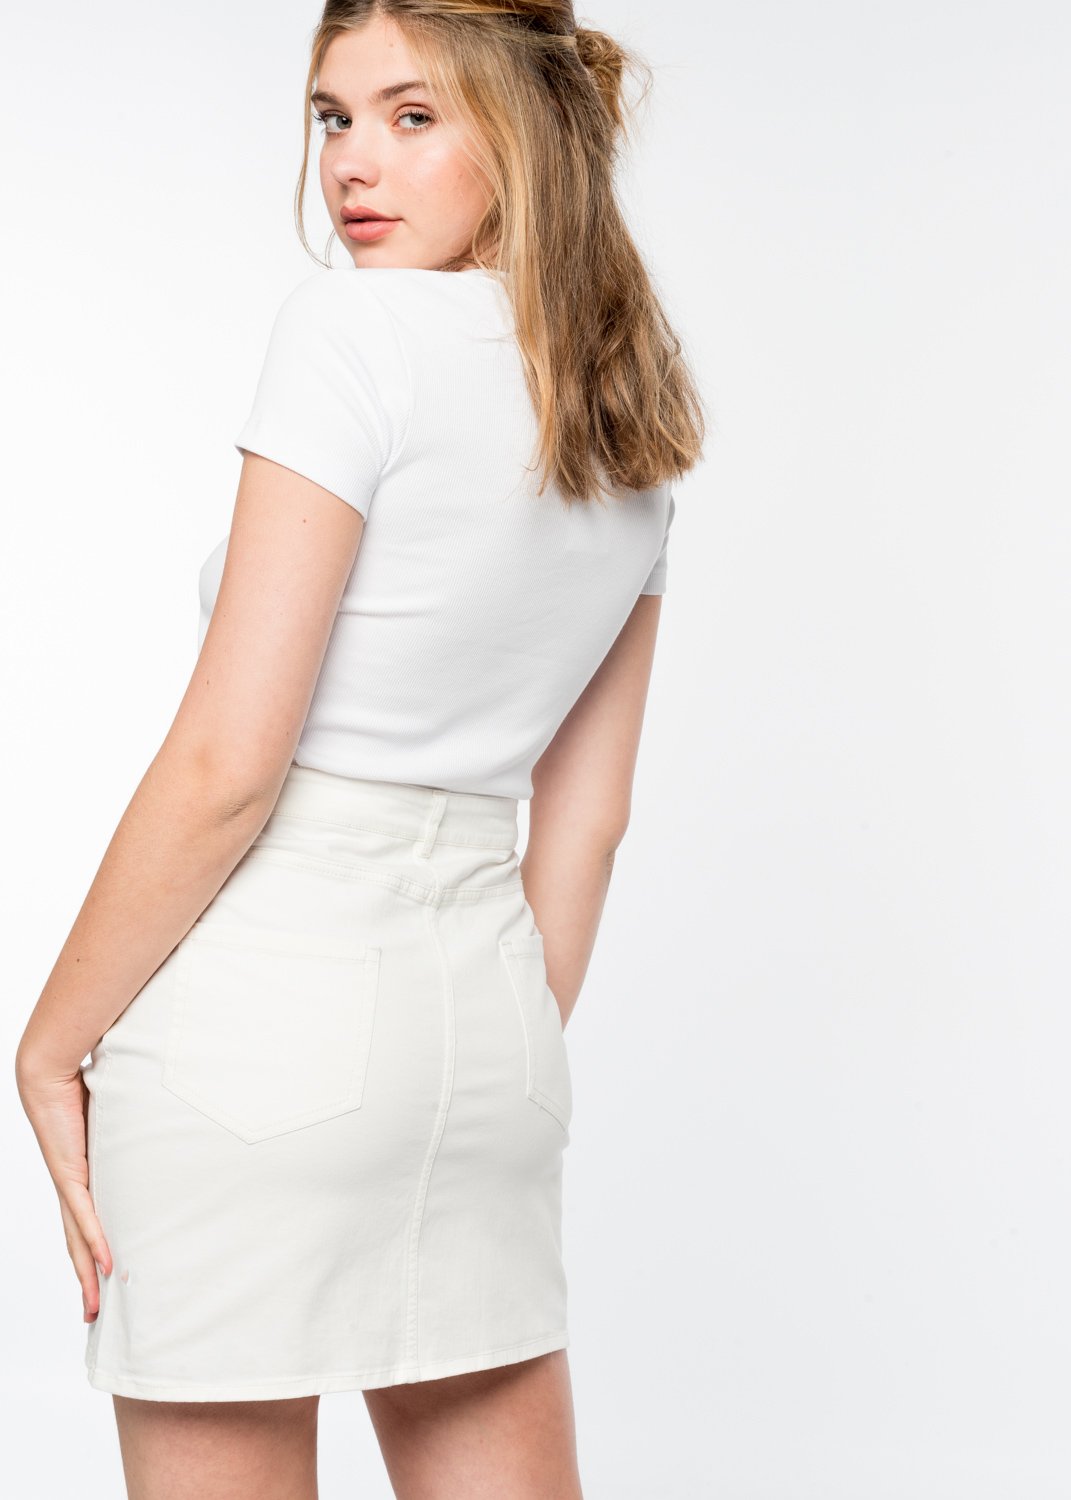 Minifalda tejana blanca